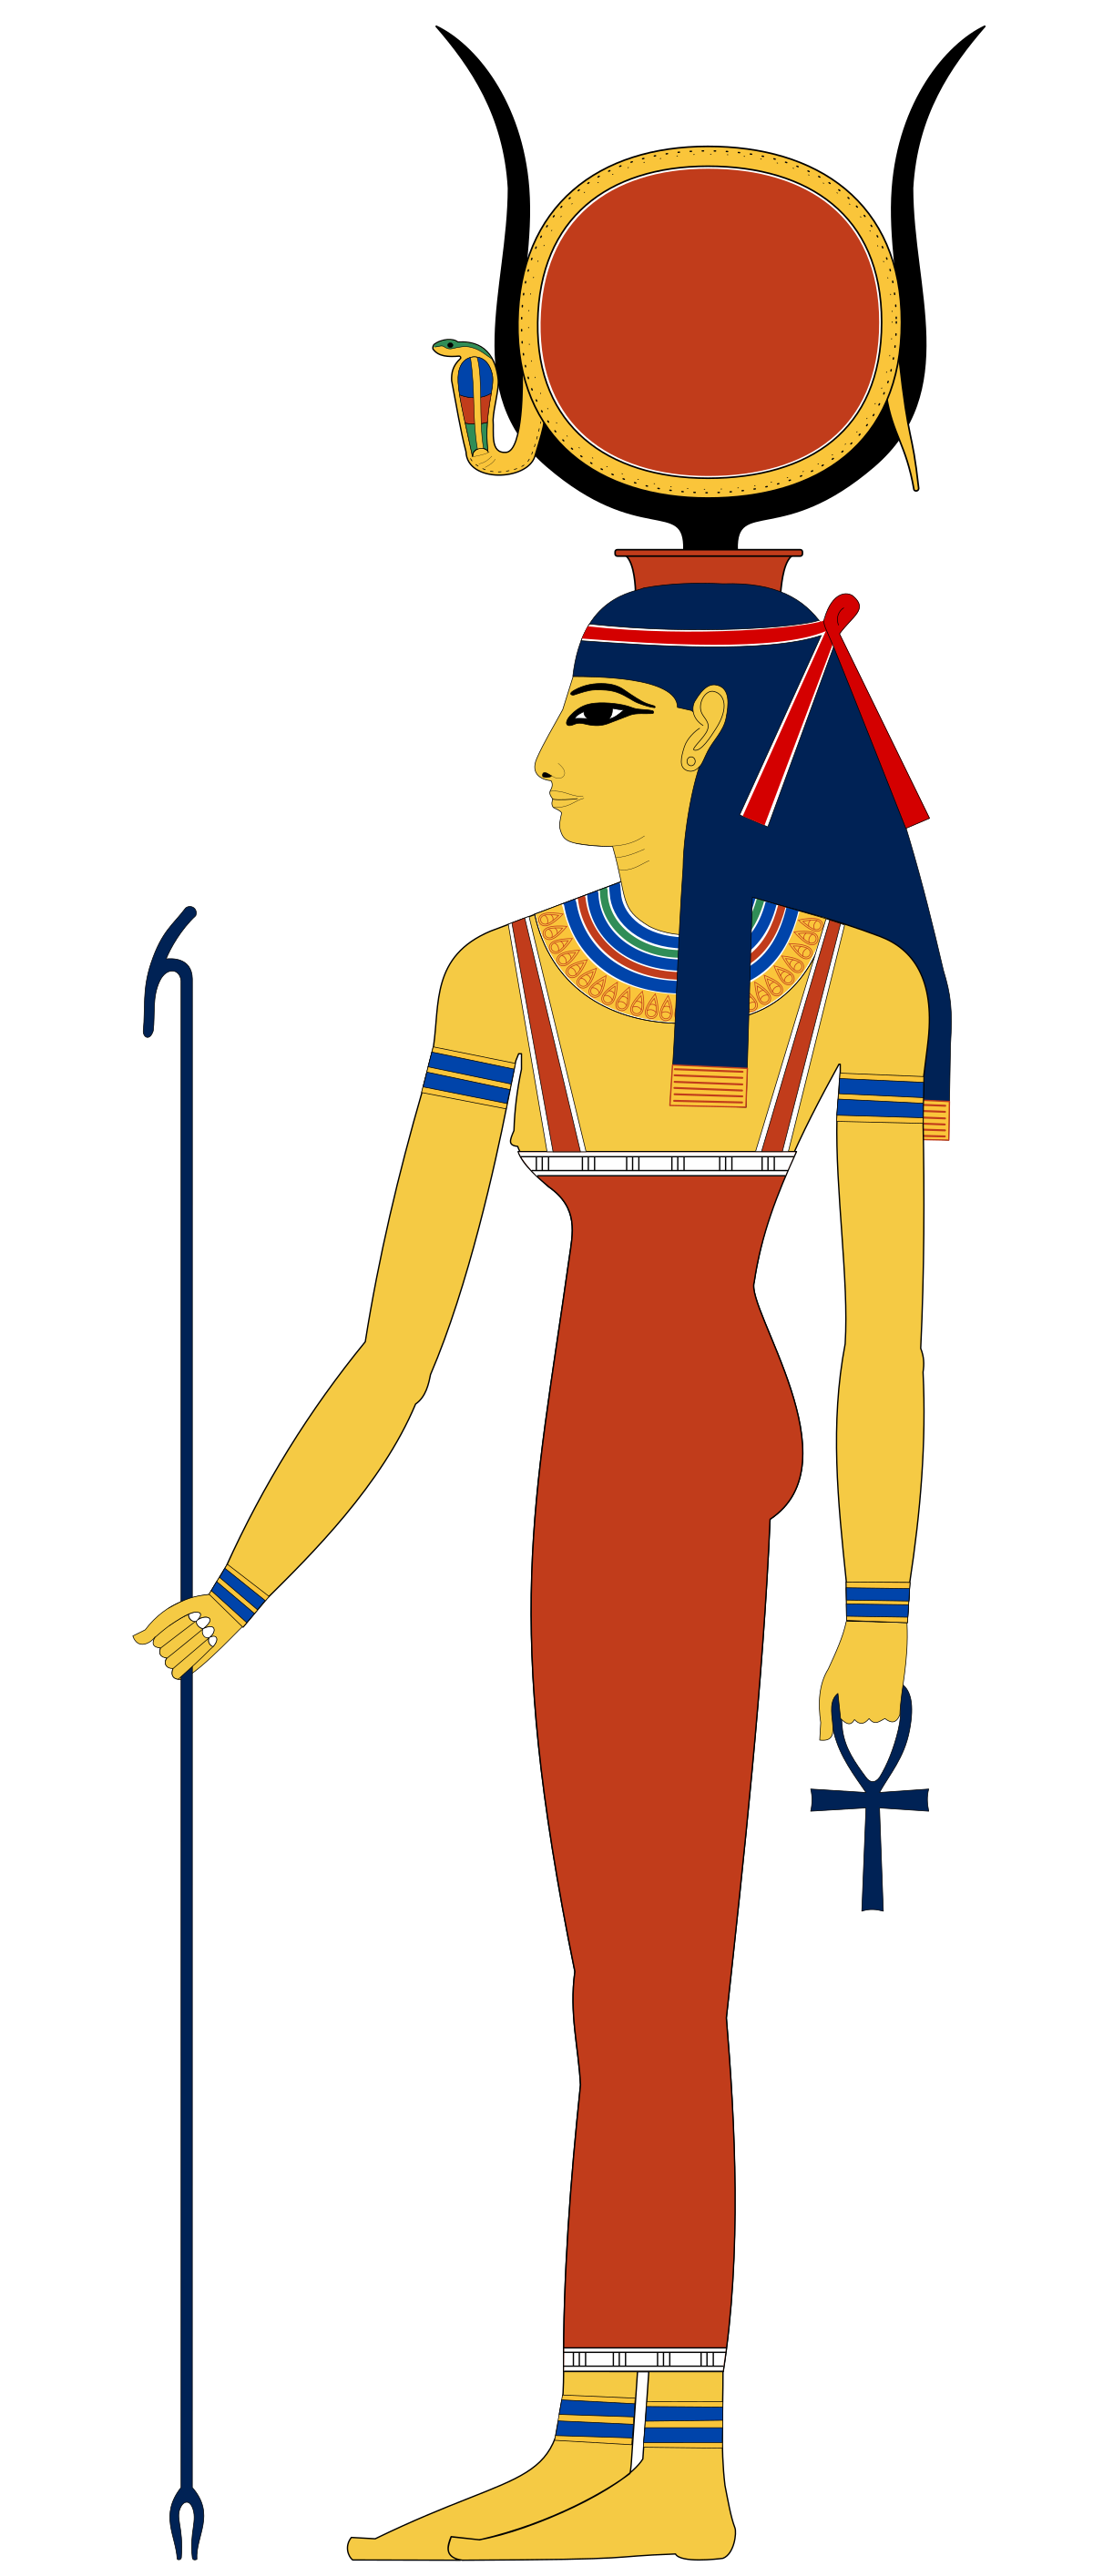 Goede Hathor (godin) - Wikipedia TW-91